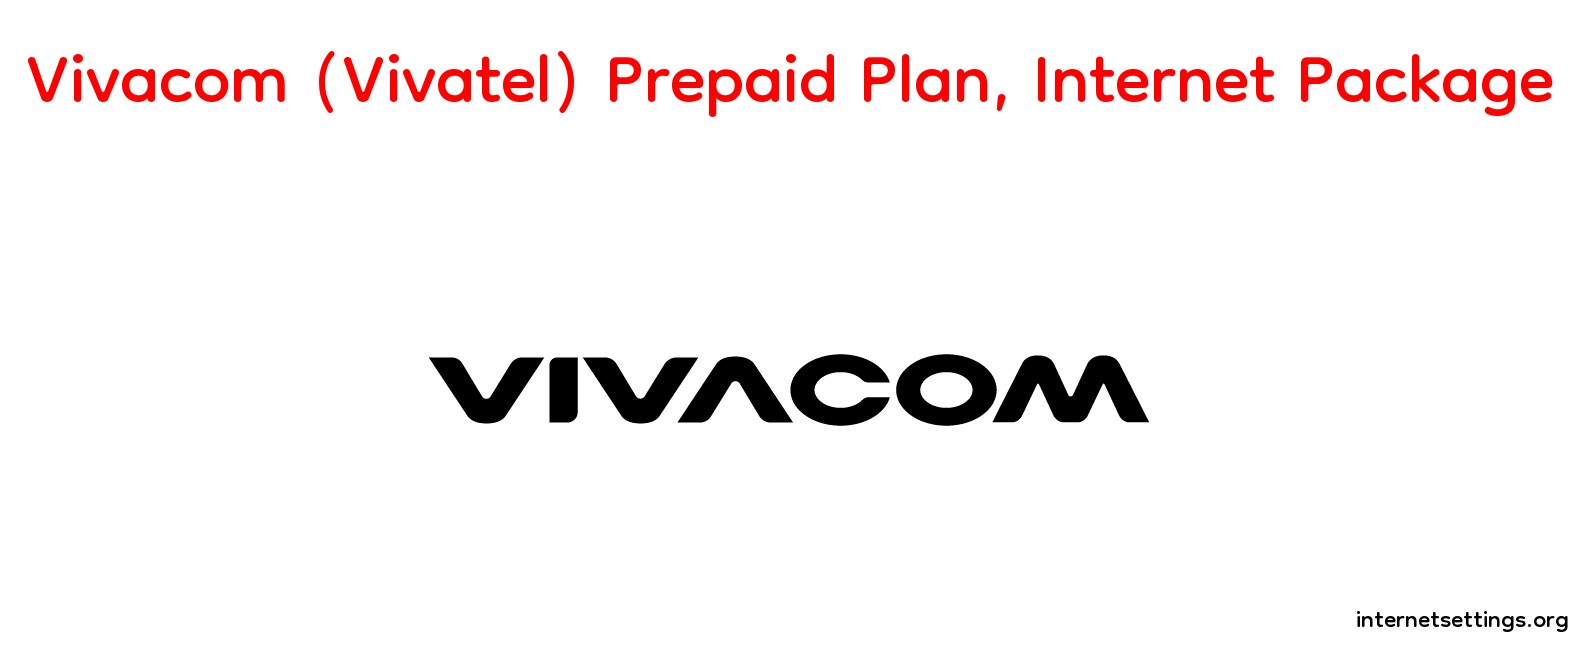 Vivacom (Vivatel) Prepaid Plan Internet Package Offer Roaming